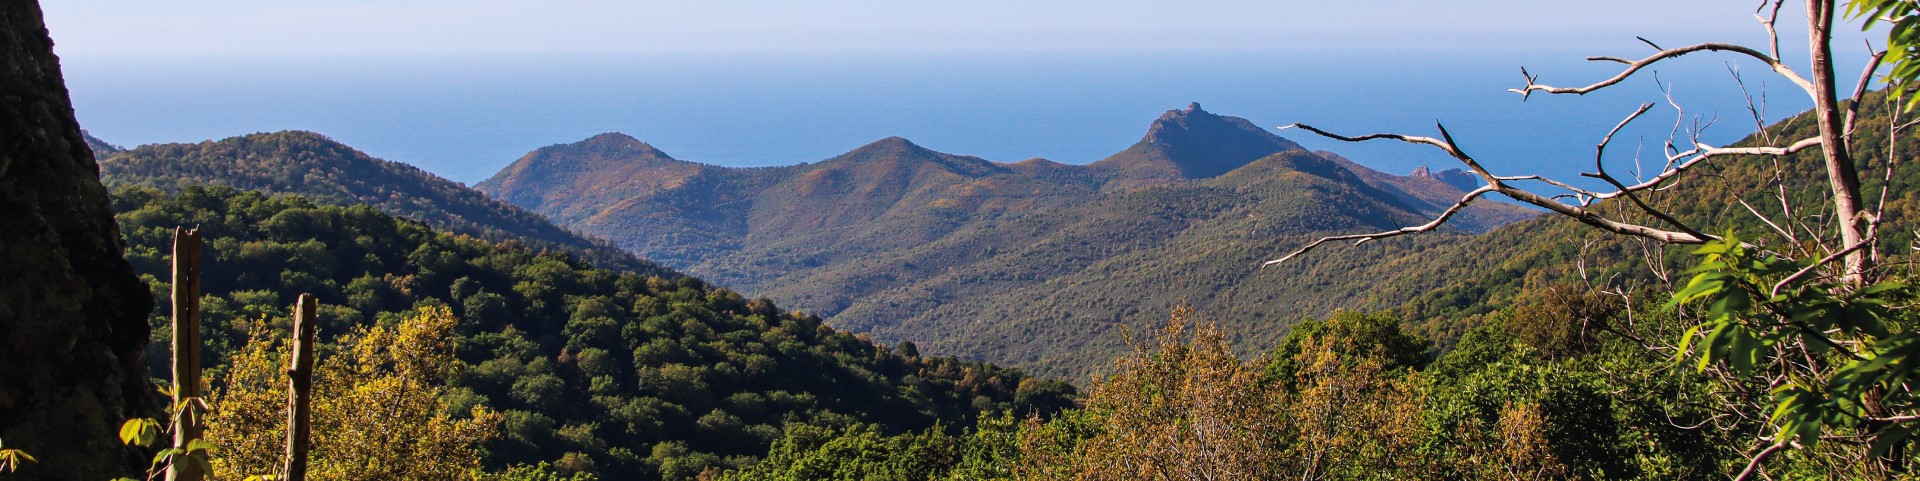 The Monts de l'Edough protected area in Algeria, a mountainous green landscape on the coast.